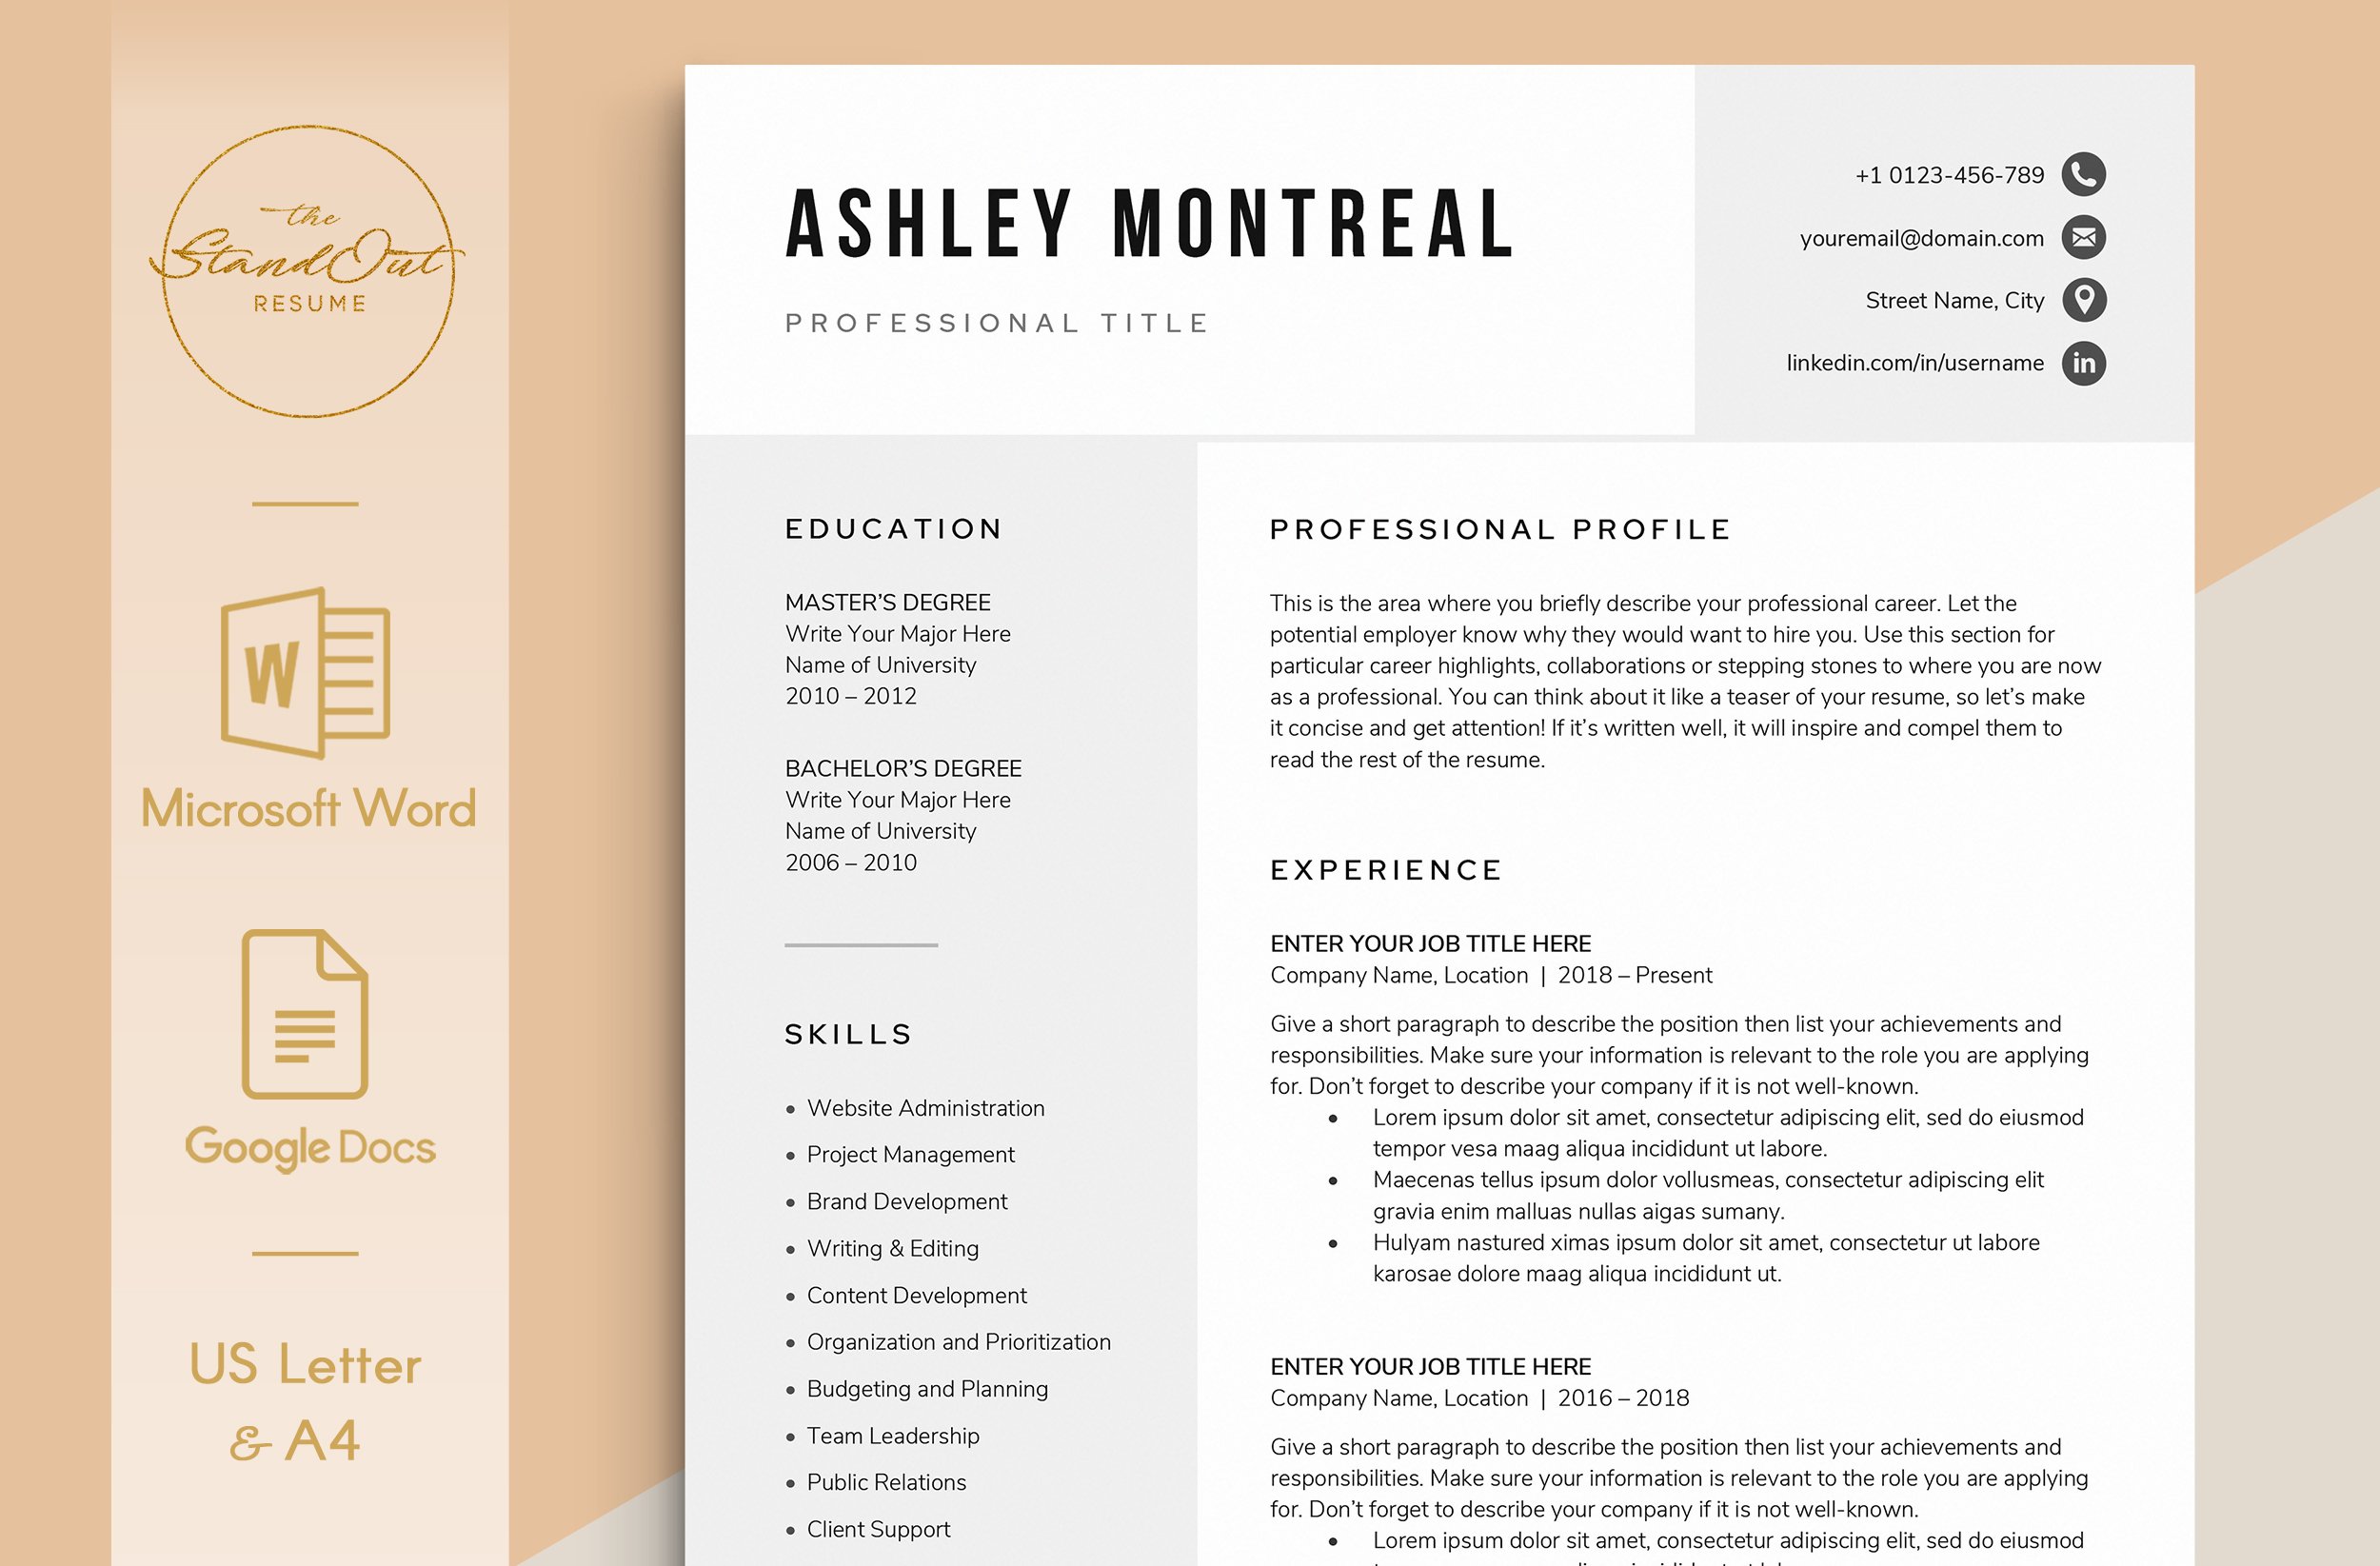 Resume/CV Template - ASHLEY cover image.